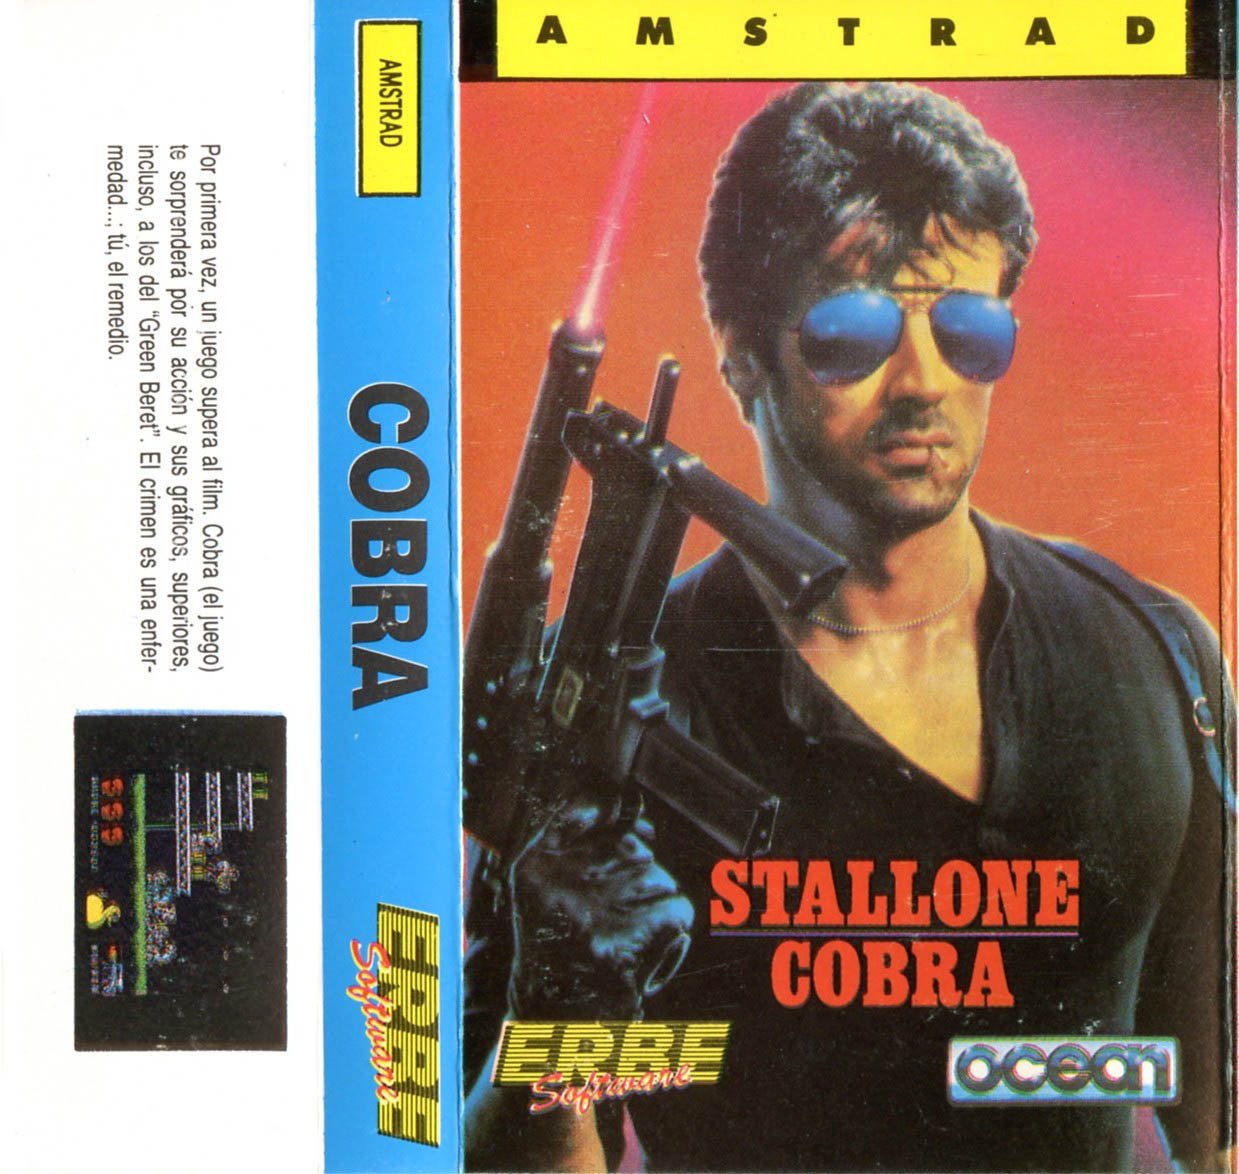 Caratula de Cobra Stallone para Amstrad CPC